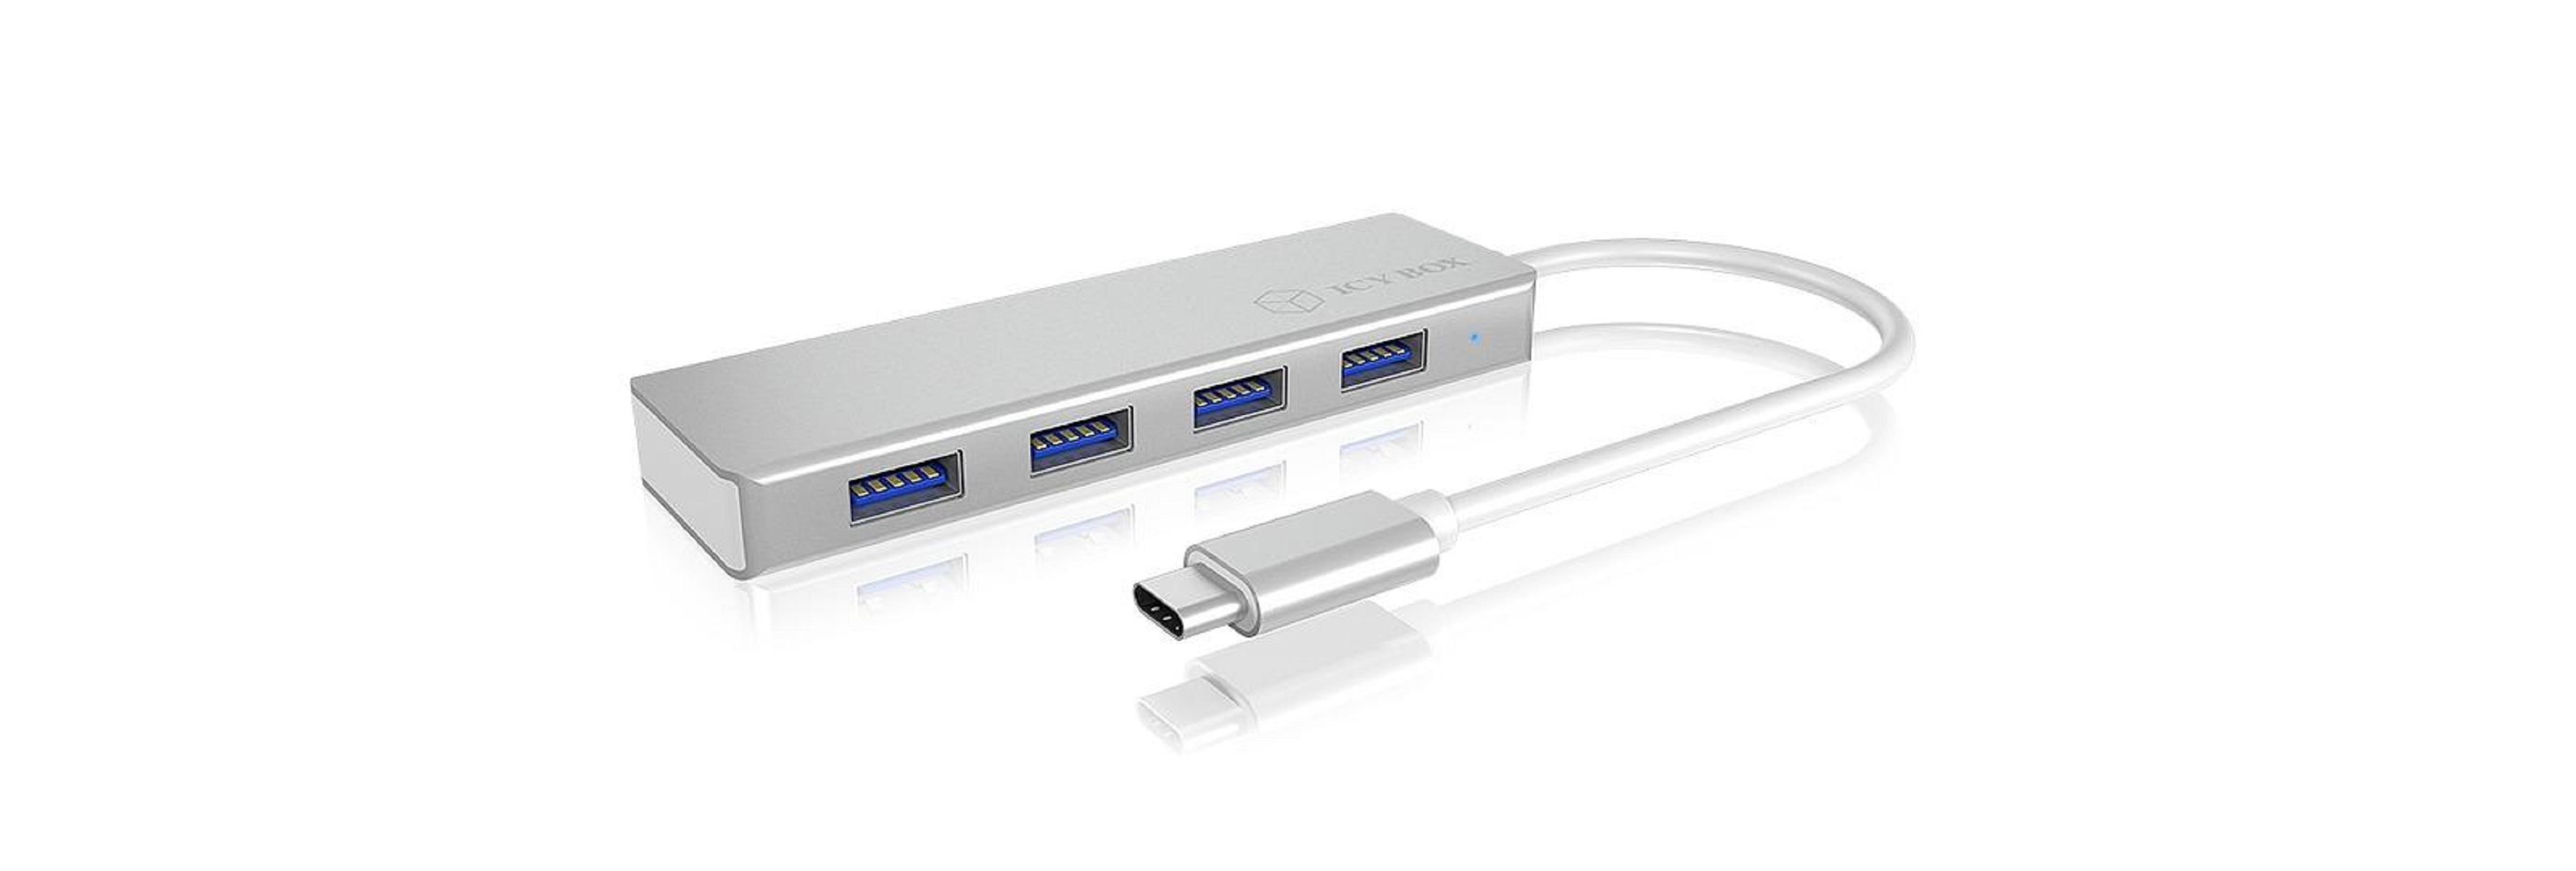 Hub, RAIDSONIC USB Silber IB-HUB1425-C3 USB Verteiler,